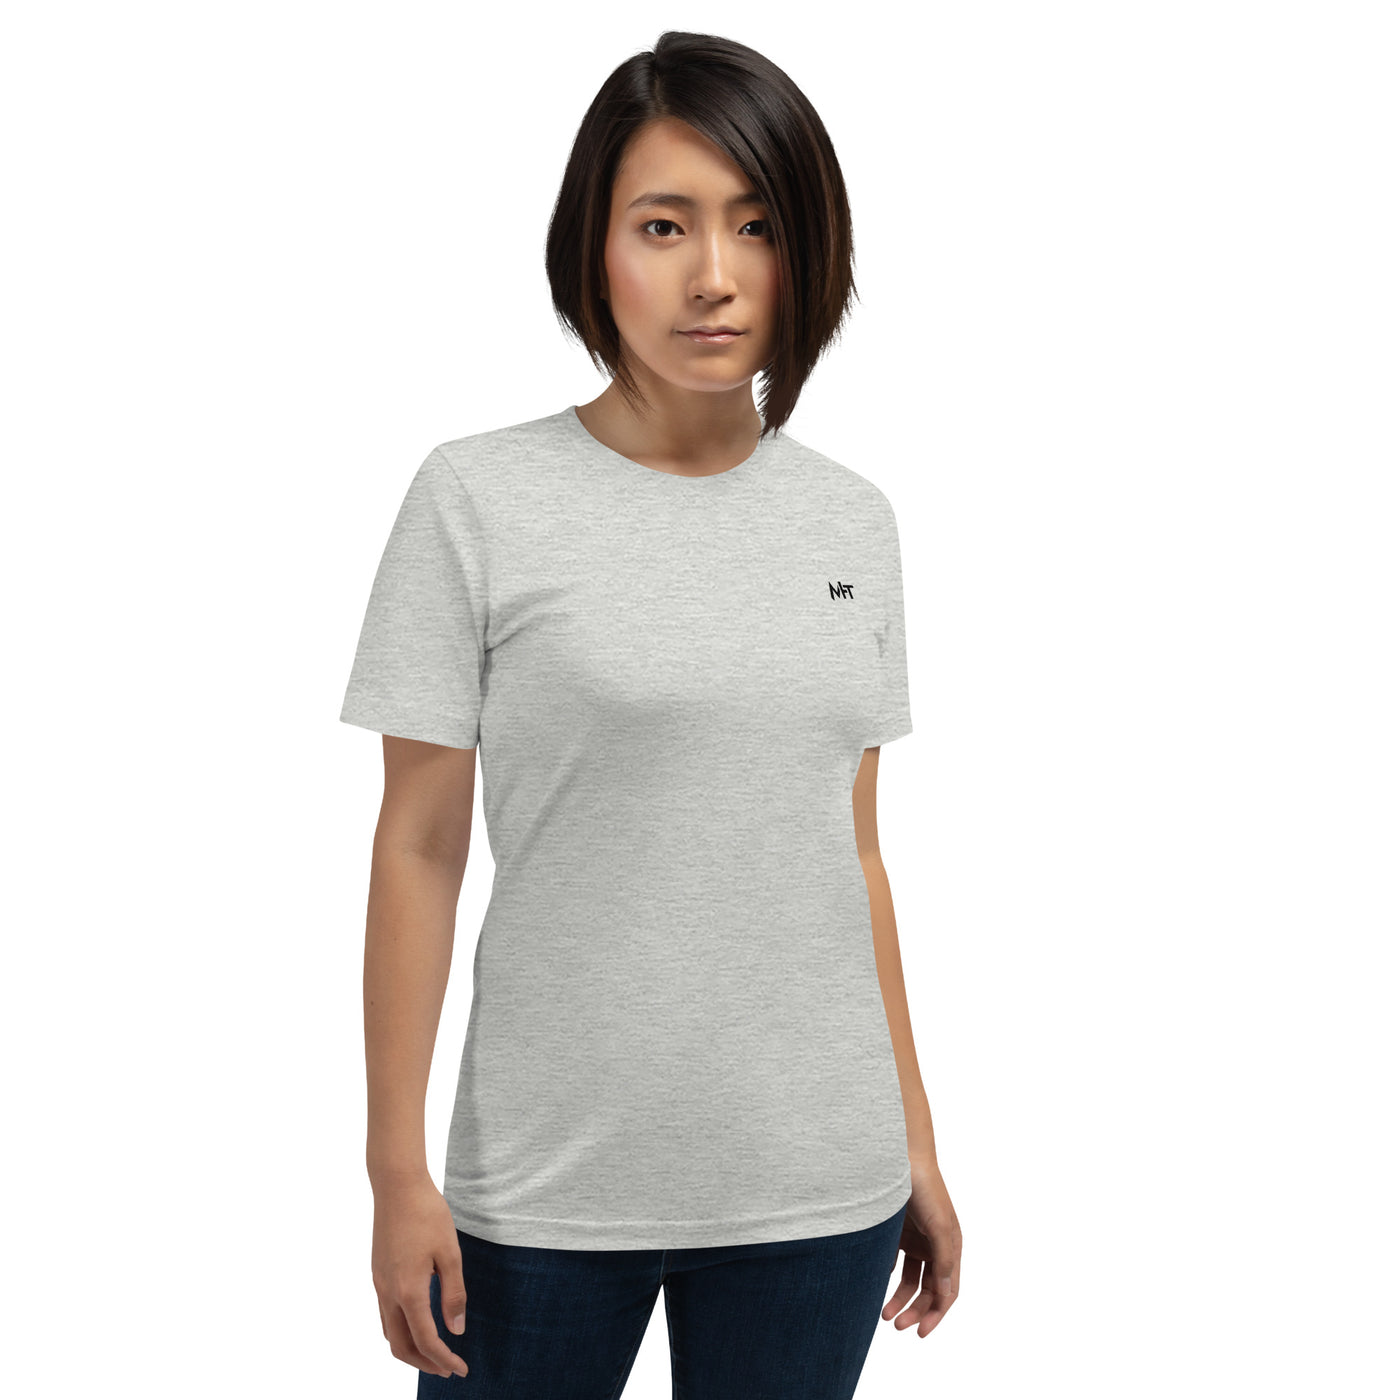 Levelling up to Big Sister for light color - Unisex t-shirt ( Back Print )